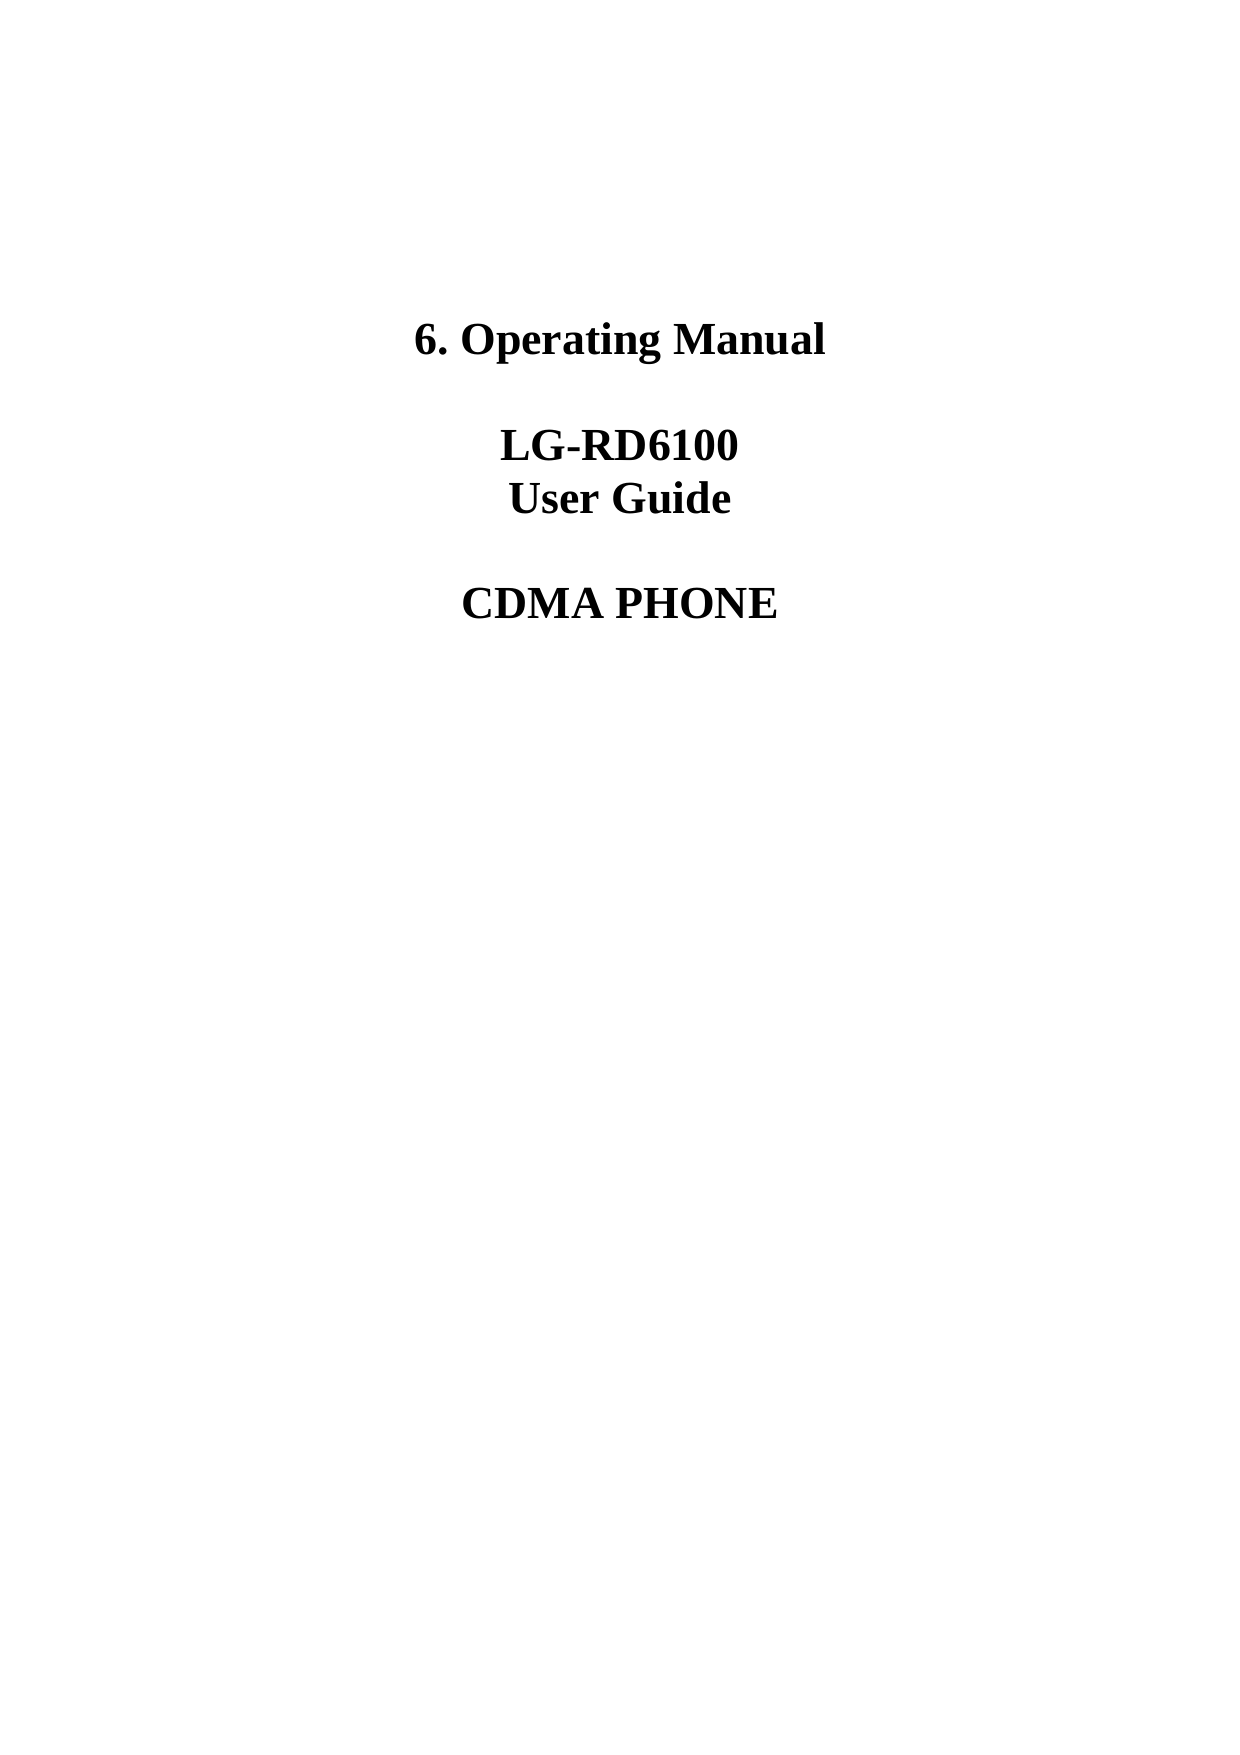   6. Operating Manual  LG-RD6100 User Guide  CDMA PHONE                          